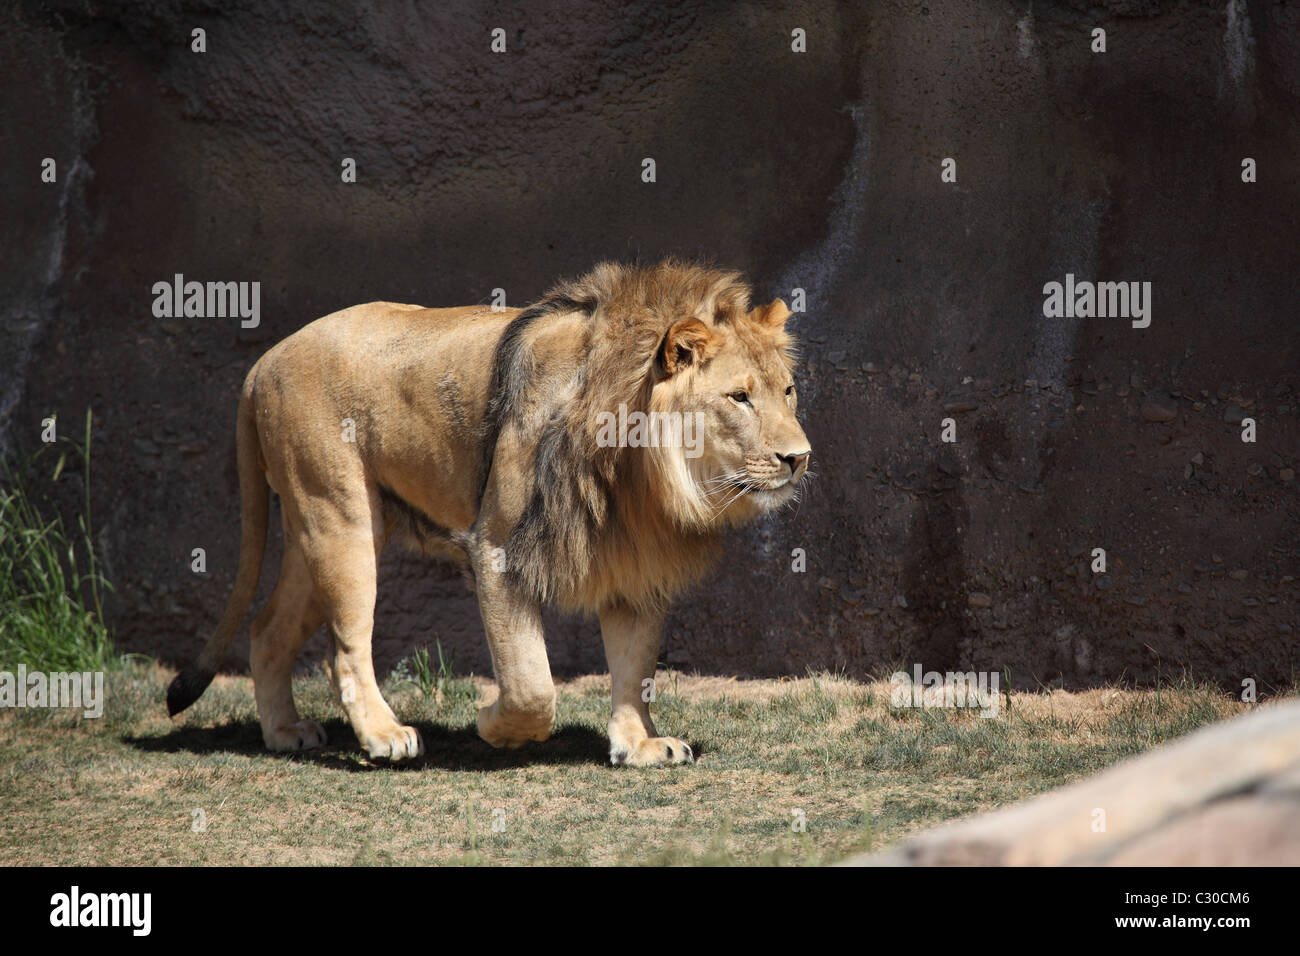 A lion walking across his exhibit Stock Photo - Alamy